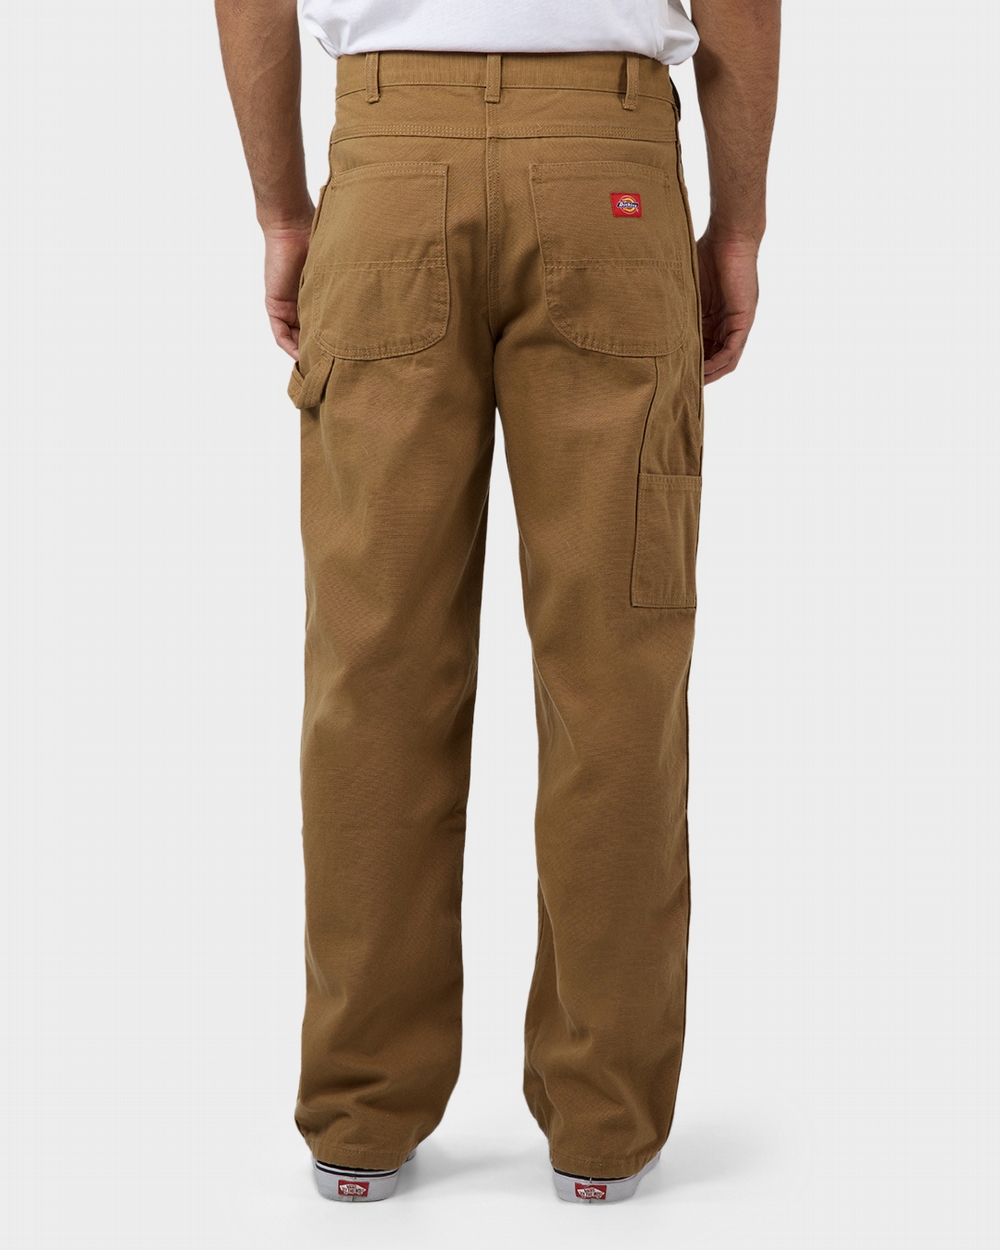 Carpenter Trousers in Brown duck | Trousers & Shorts | Dickies UK.